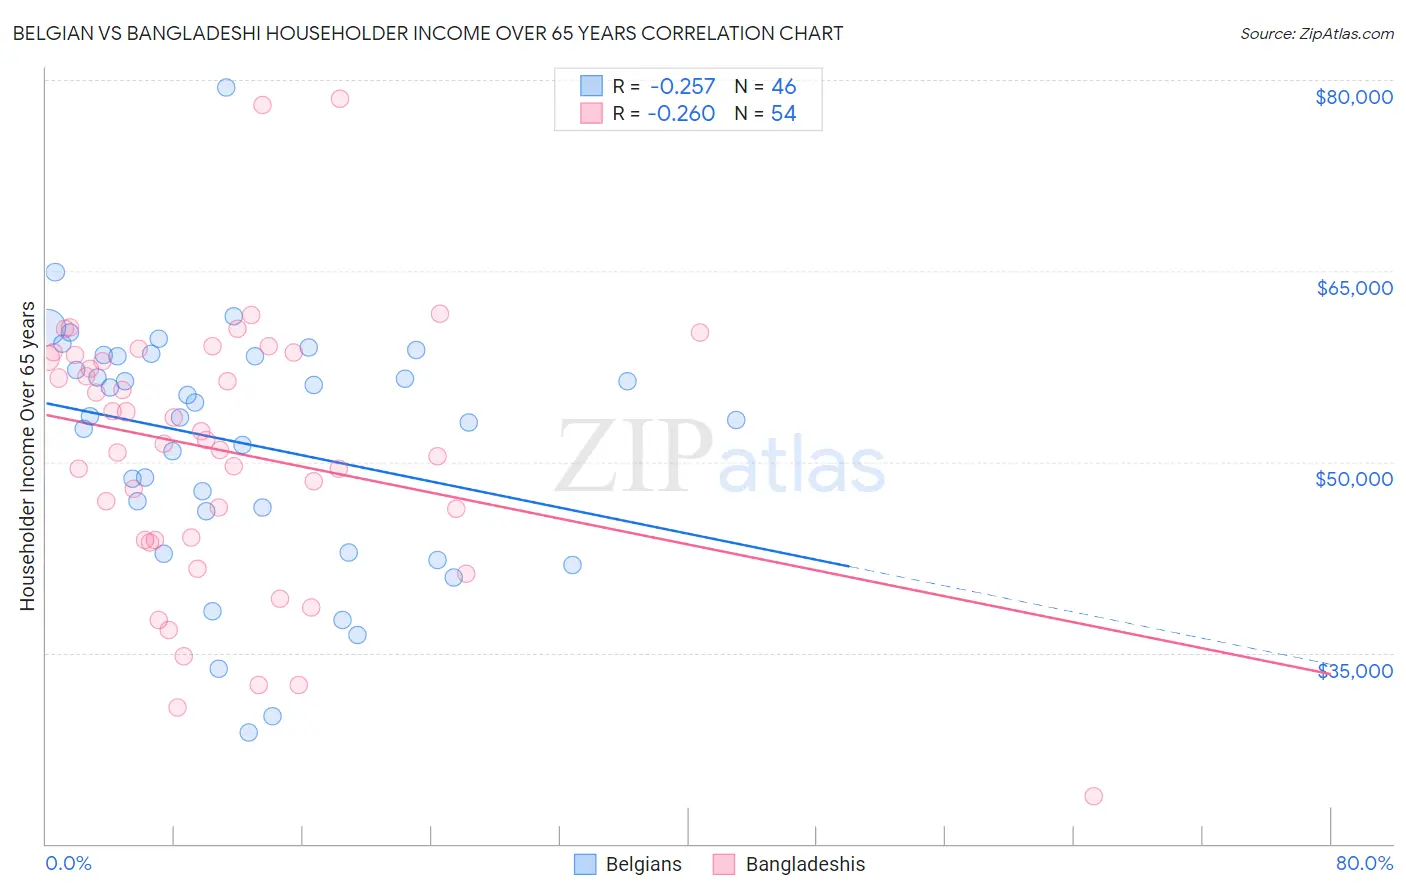 Belgian vs Bangladeshi Householder Income Over 65 years